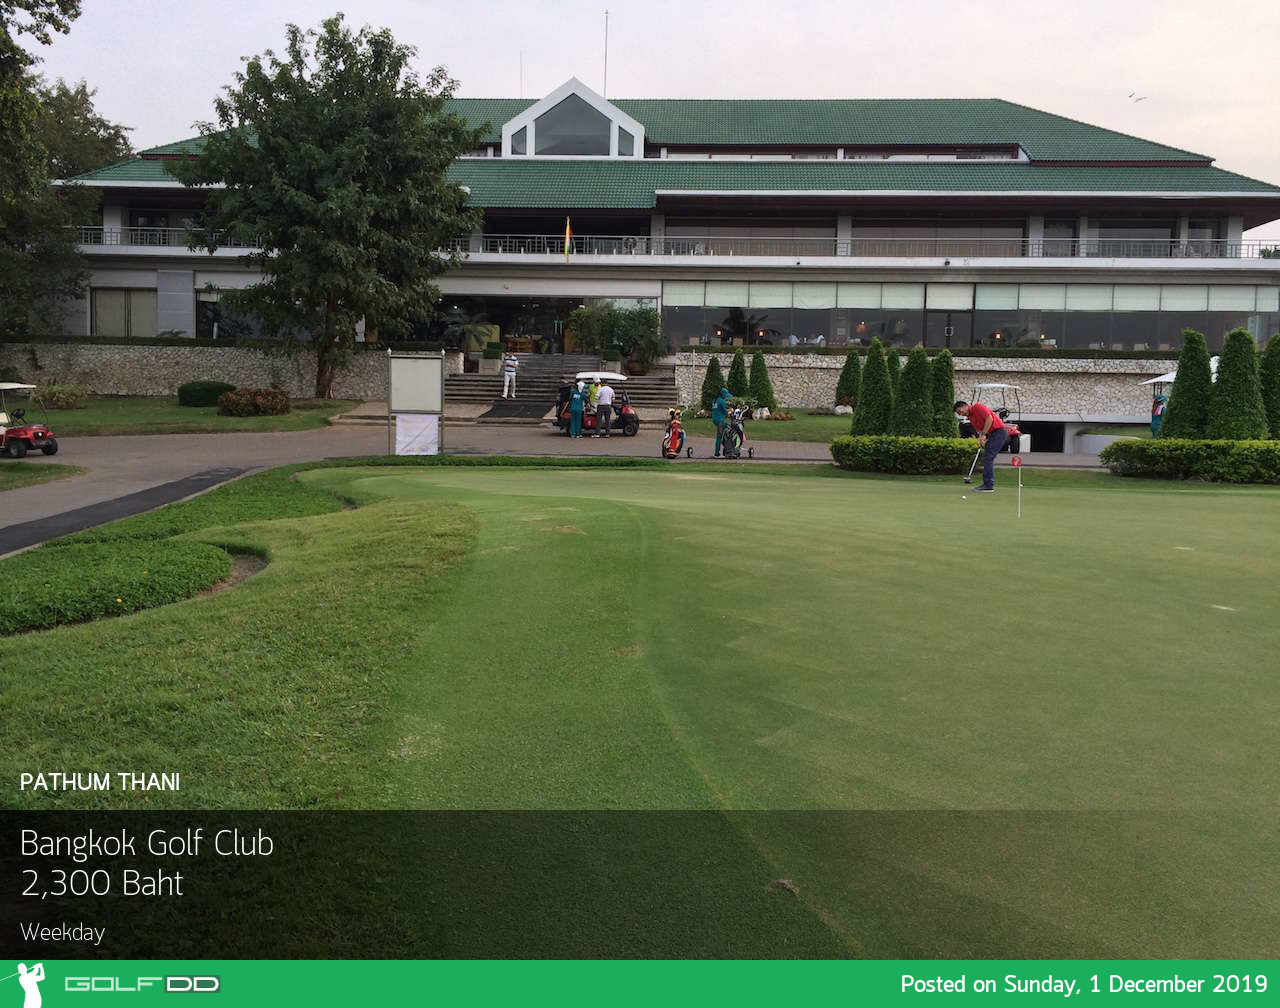 Bangkok Golf Club ยืนหนึ่งเรื่องกรีนและแฟร์เวย์ สนามดีๆที่นักกอล์ฟควรได้ลอง 